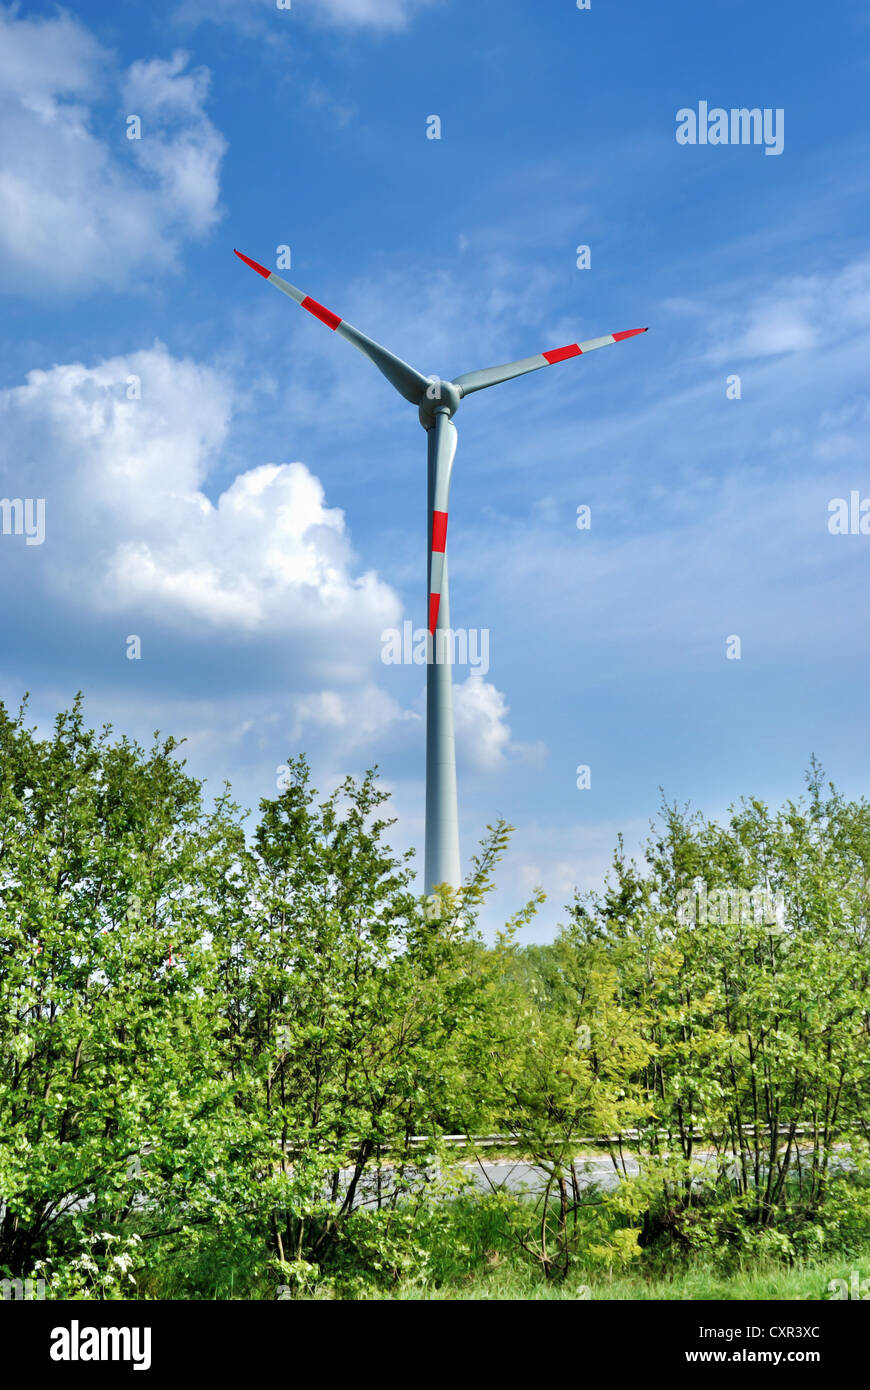 White wind turbine electric power generator under blue sky Stock Photo